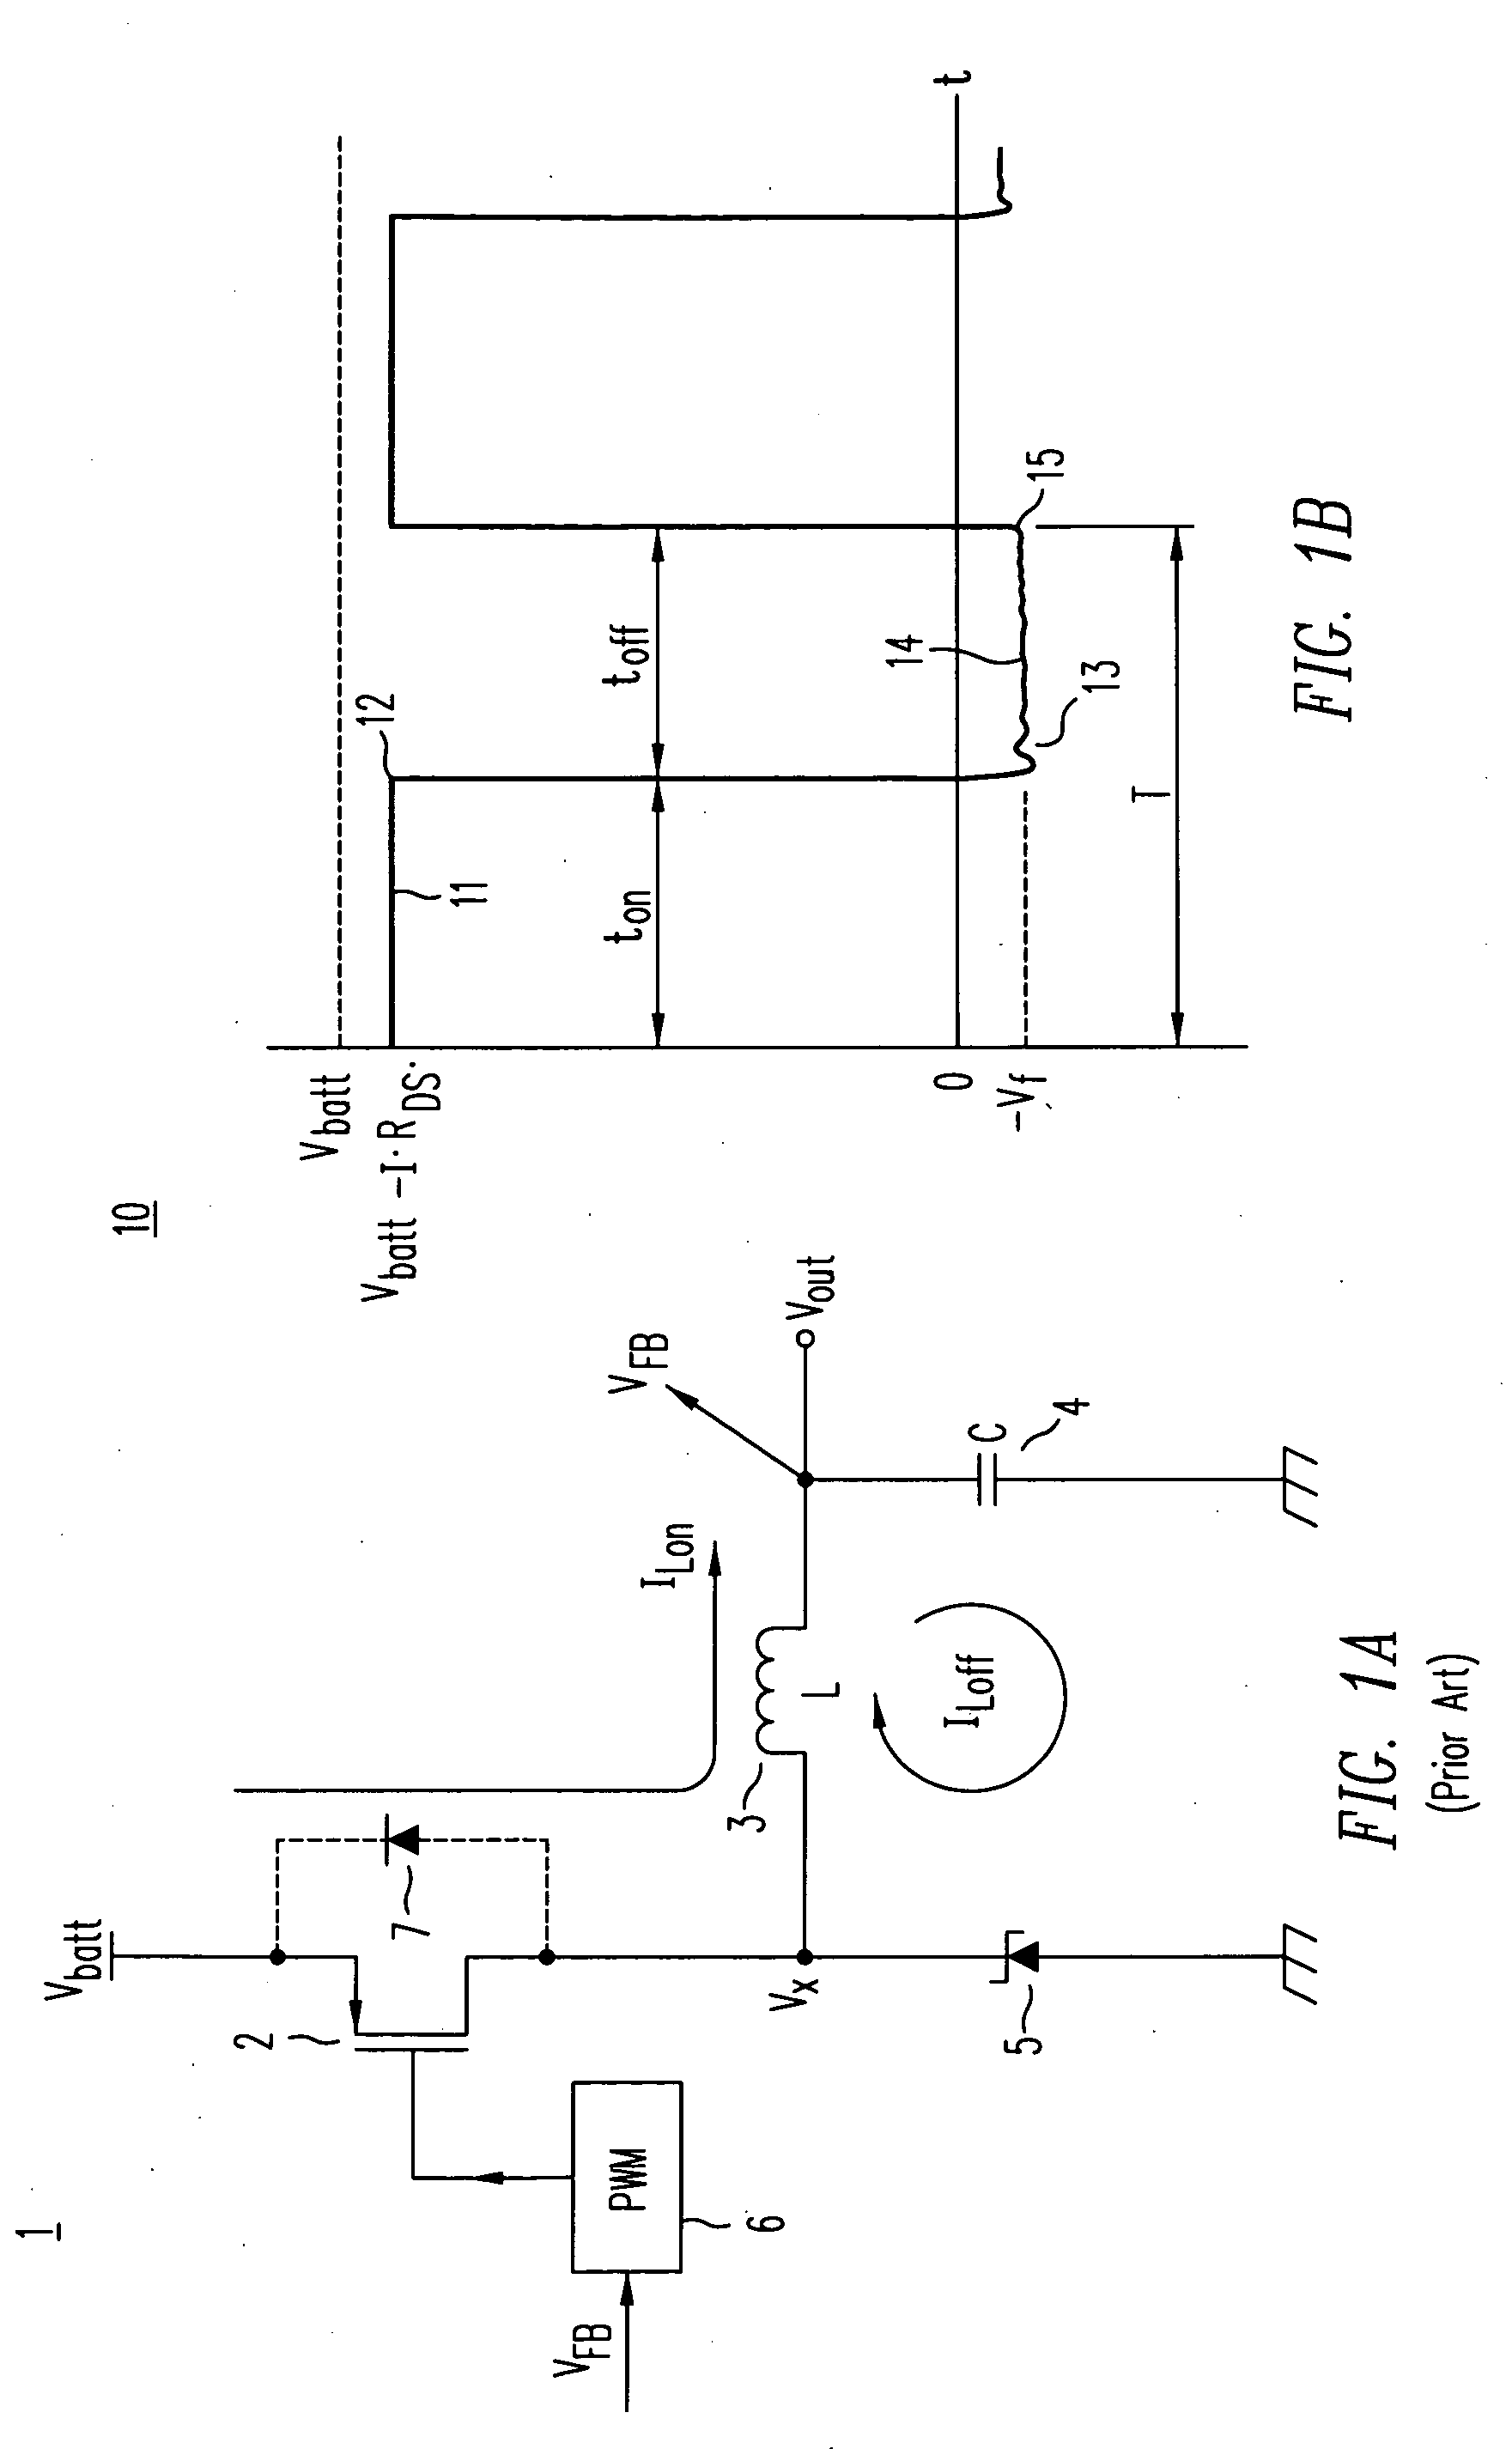 Step-down switching regulator with freewheeling diode